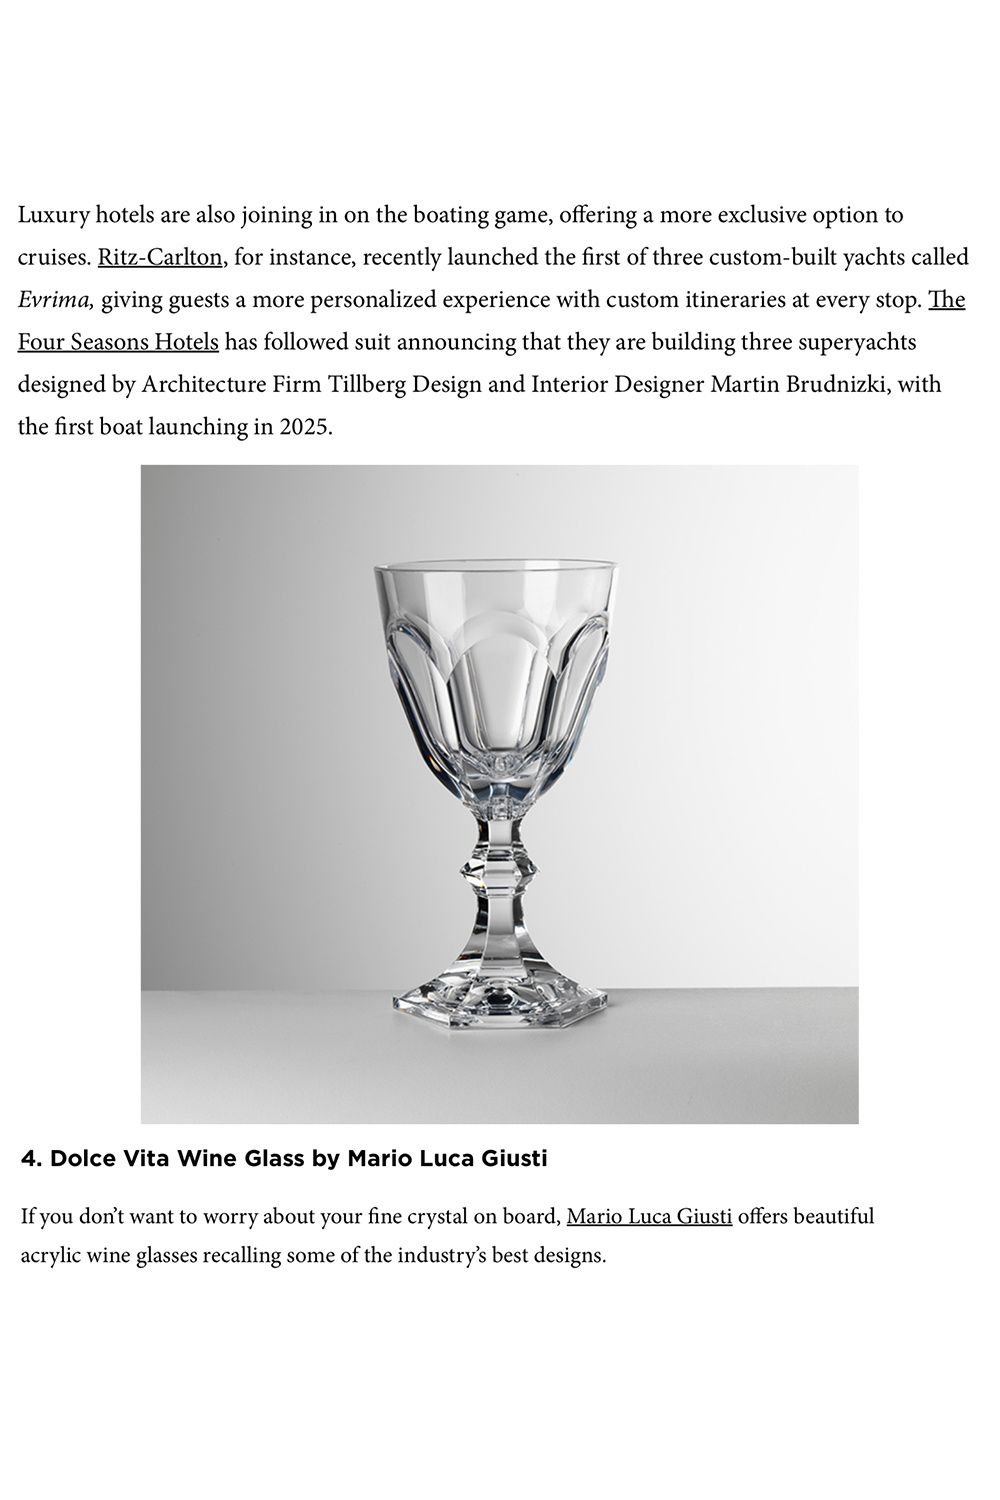 Dolce Vita Wine Glass by Mario Luca Giusti